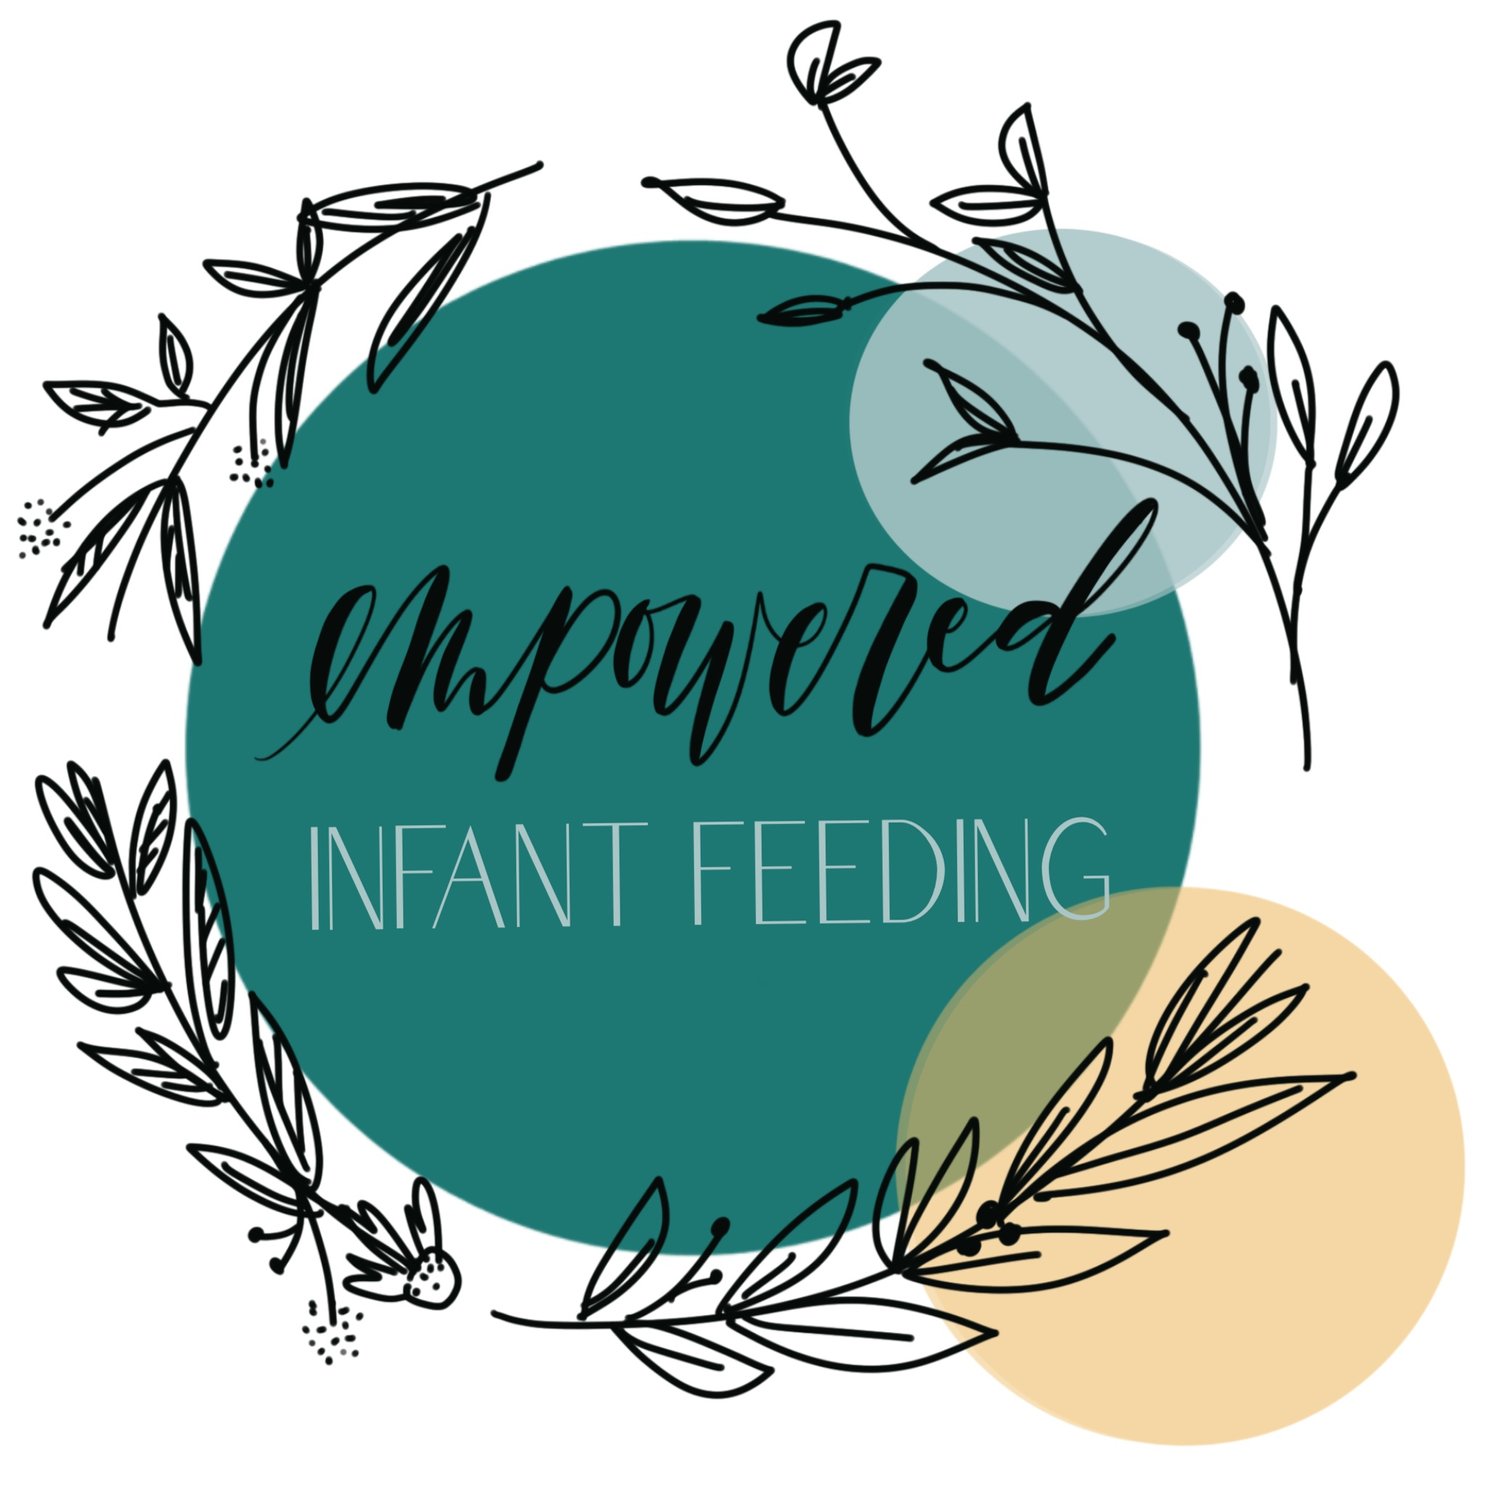 Empowered Infant Feeding